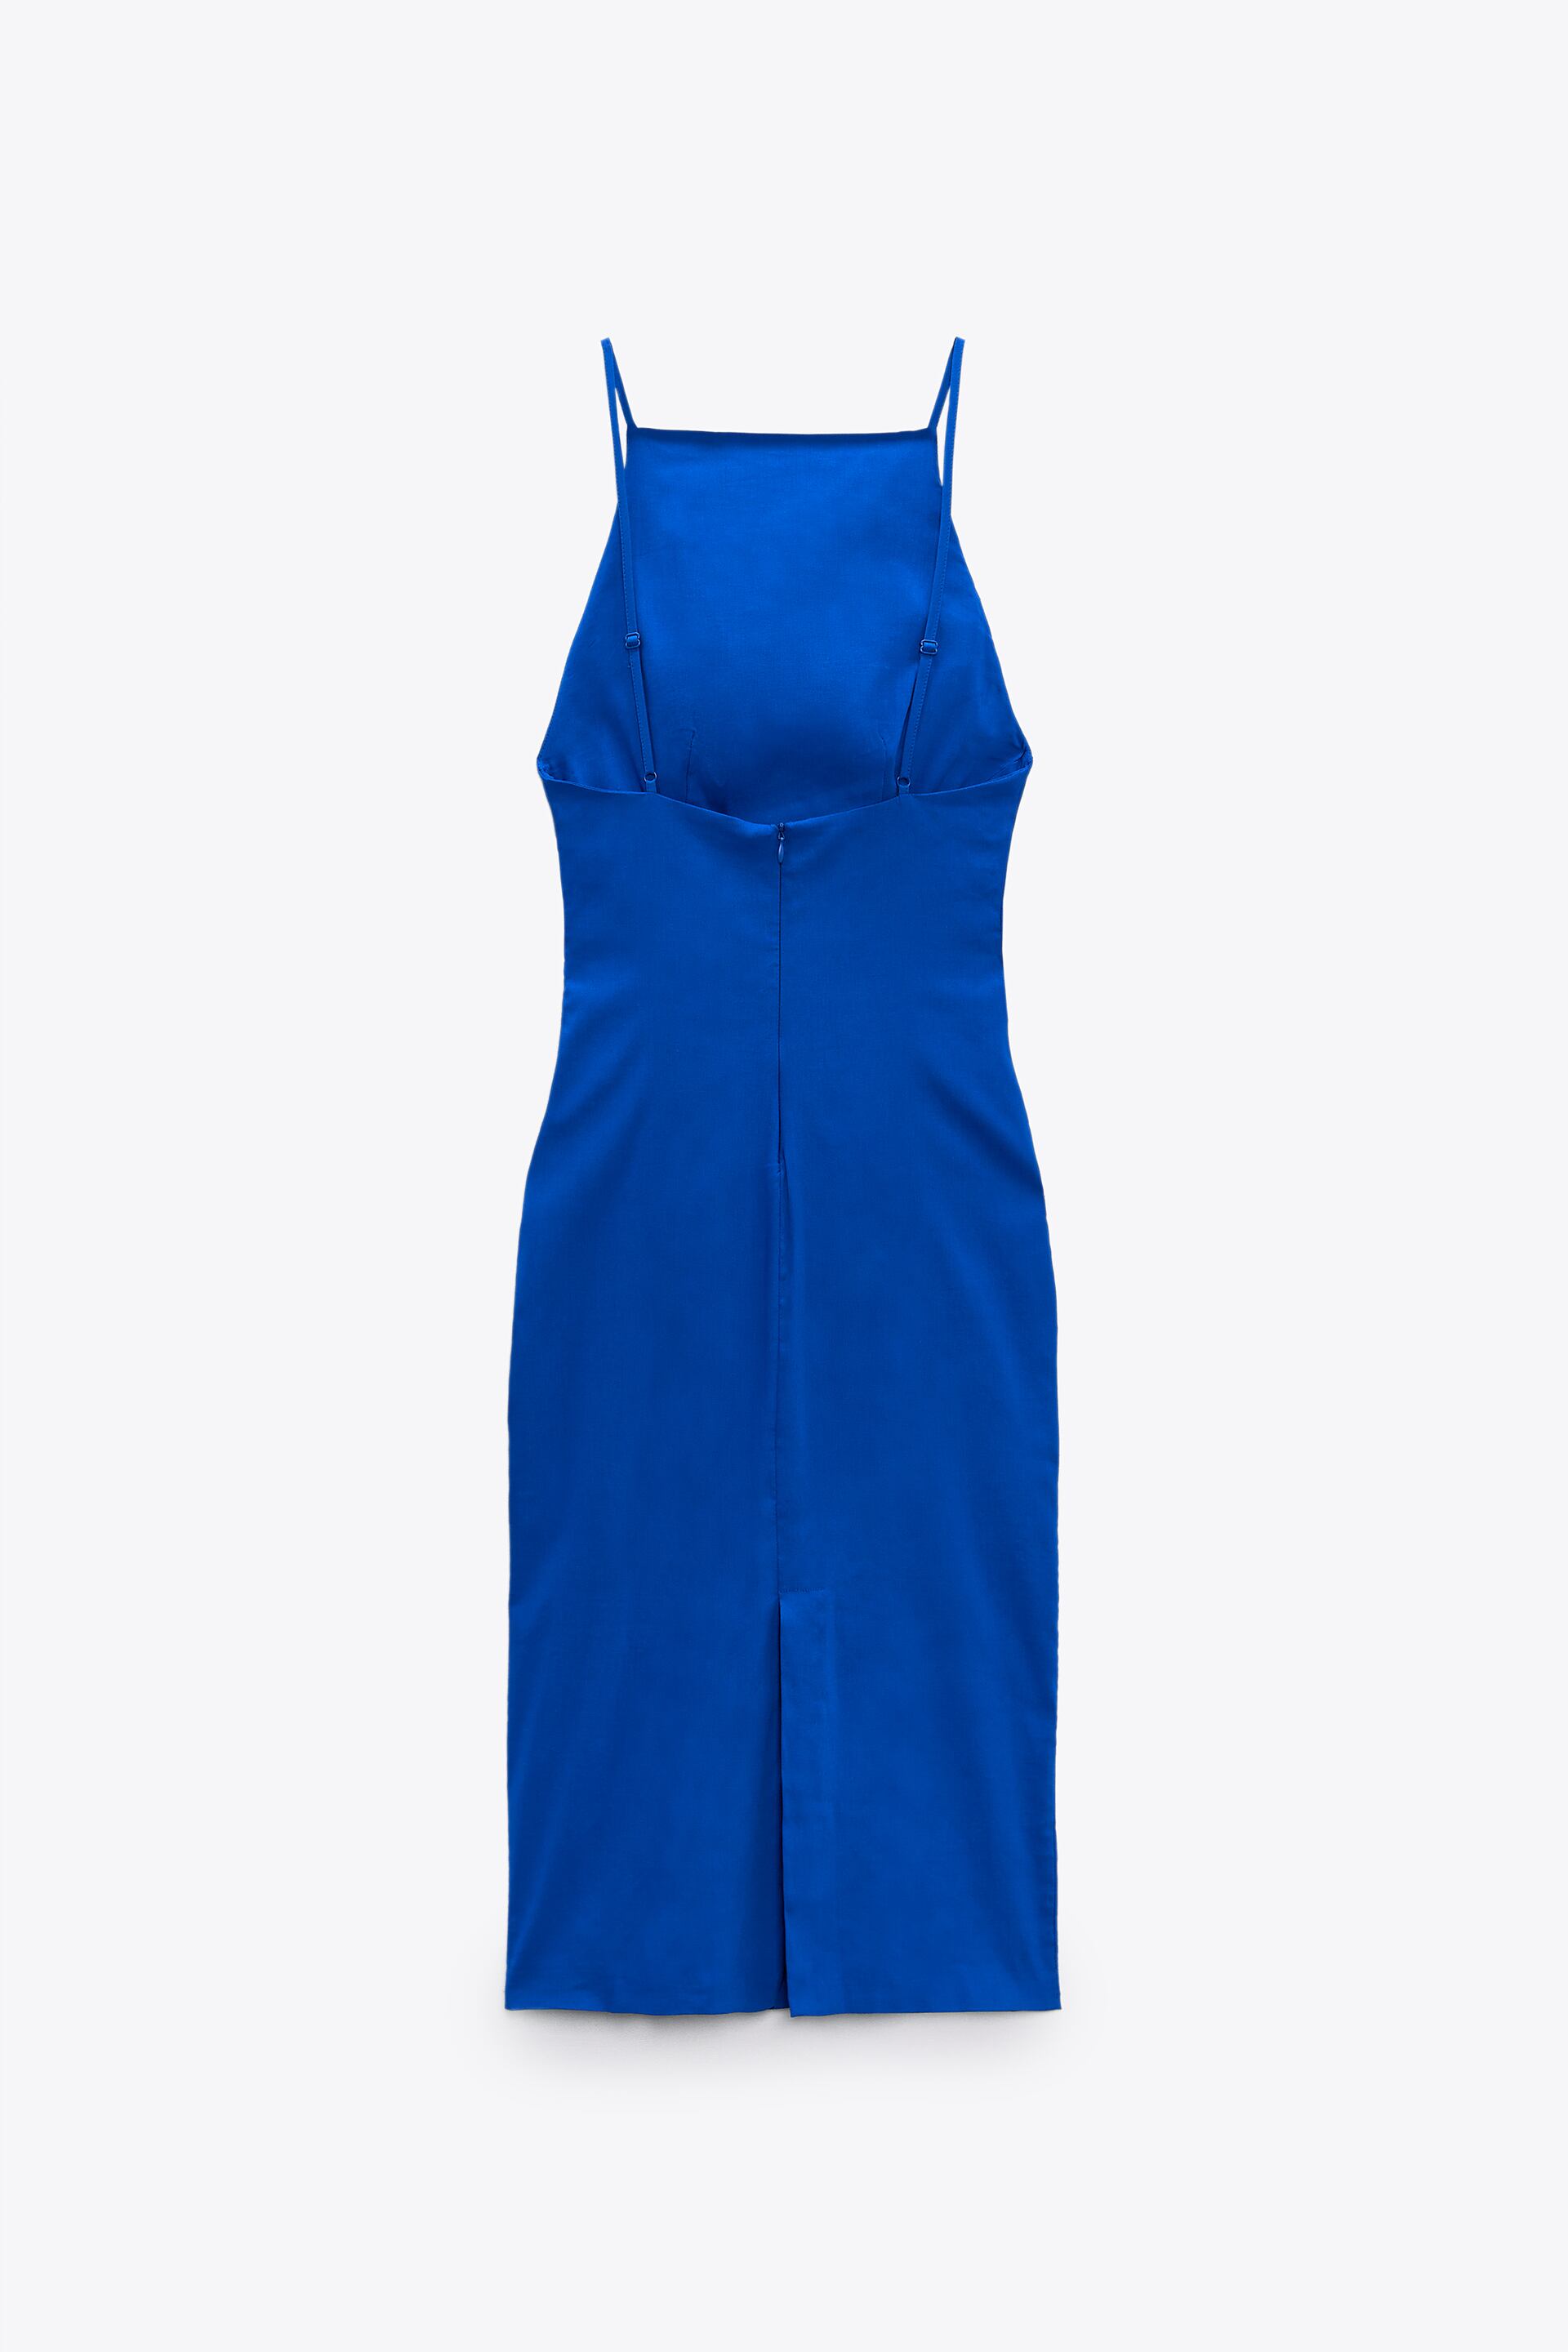 فستان زارا الازرق